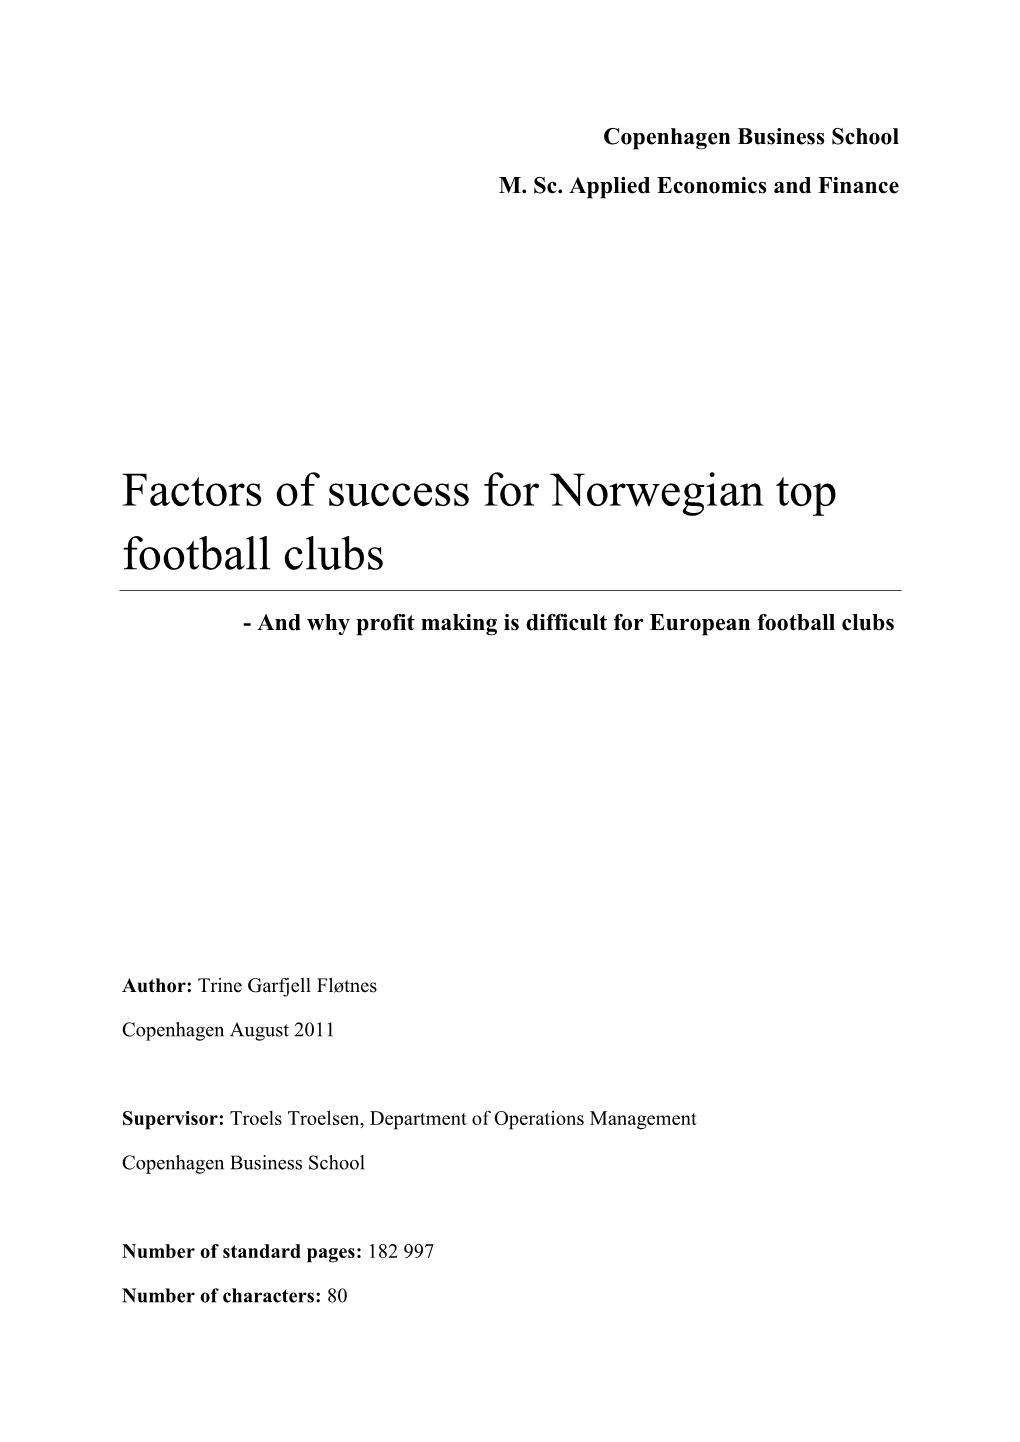 Factors of Success for Norwegian Top Football Clubs